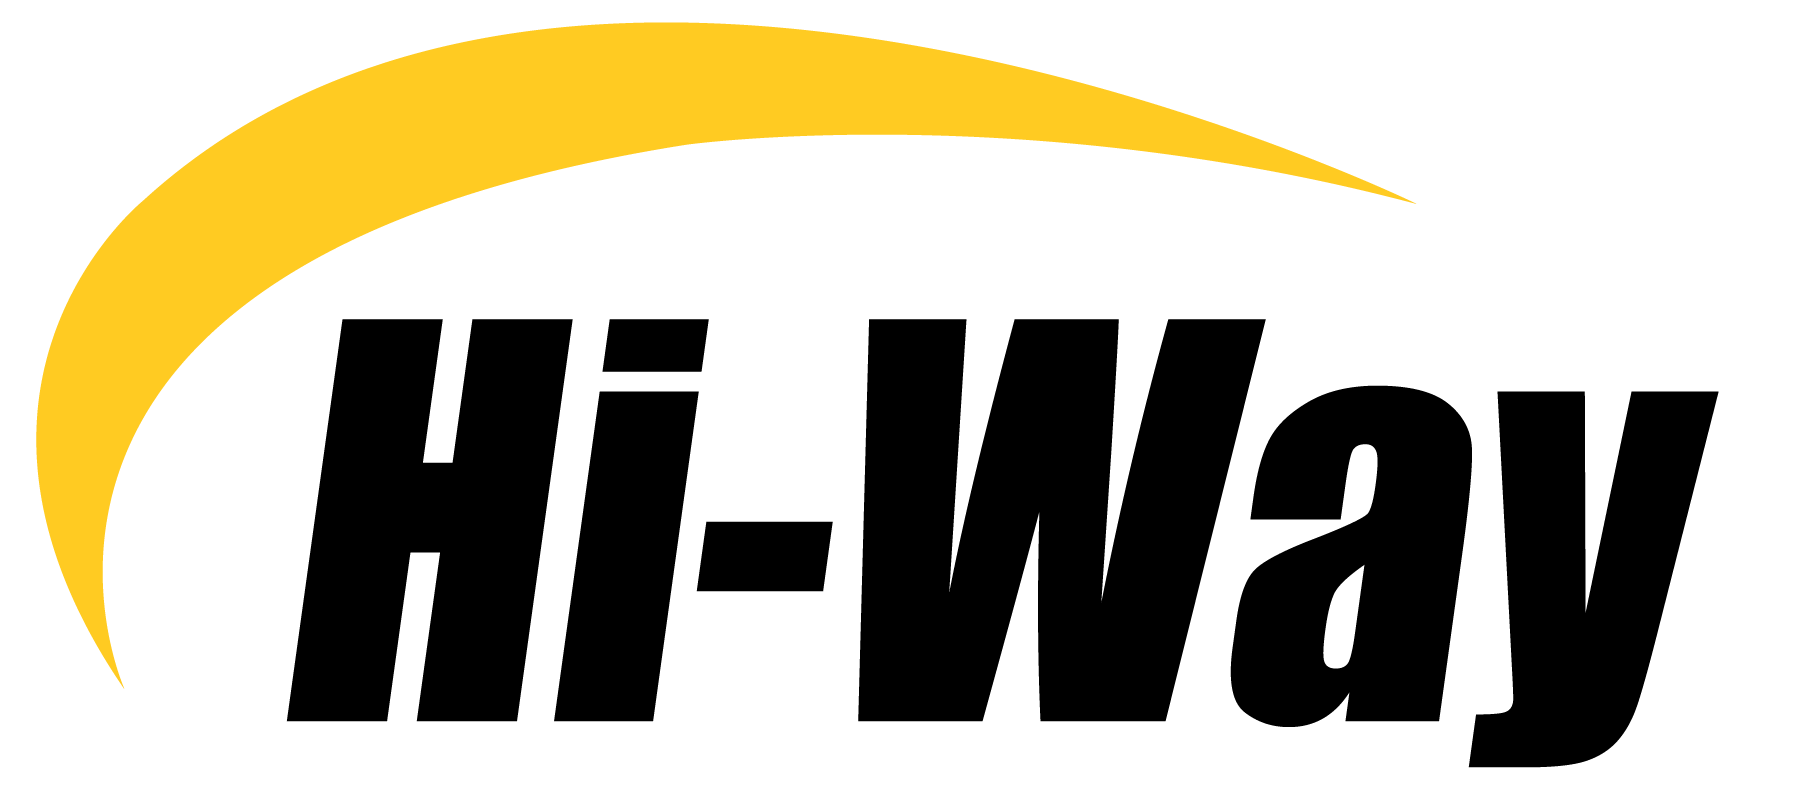 WA Y Logo - Hi Way Salt Spreaders, Sand Spreaders, And Deicing Equipment